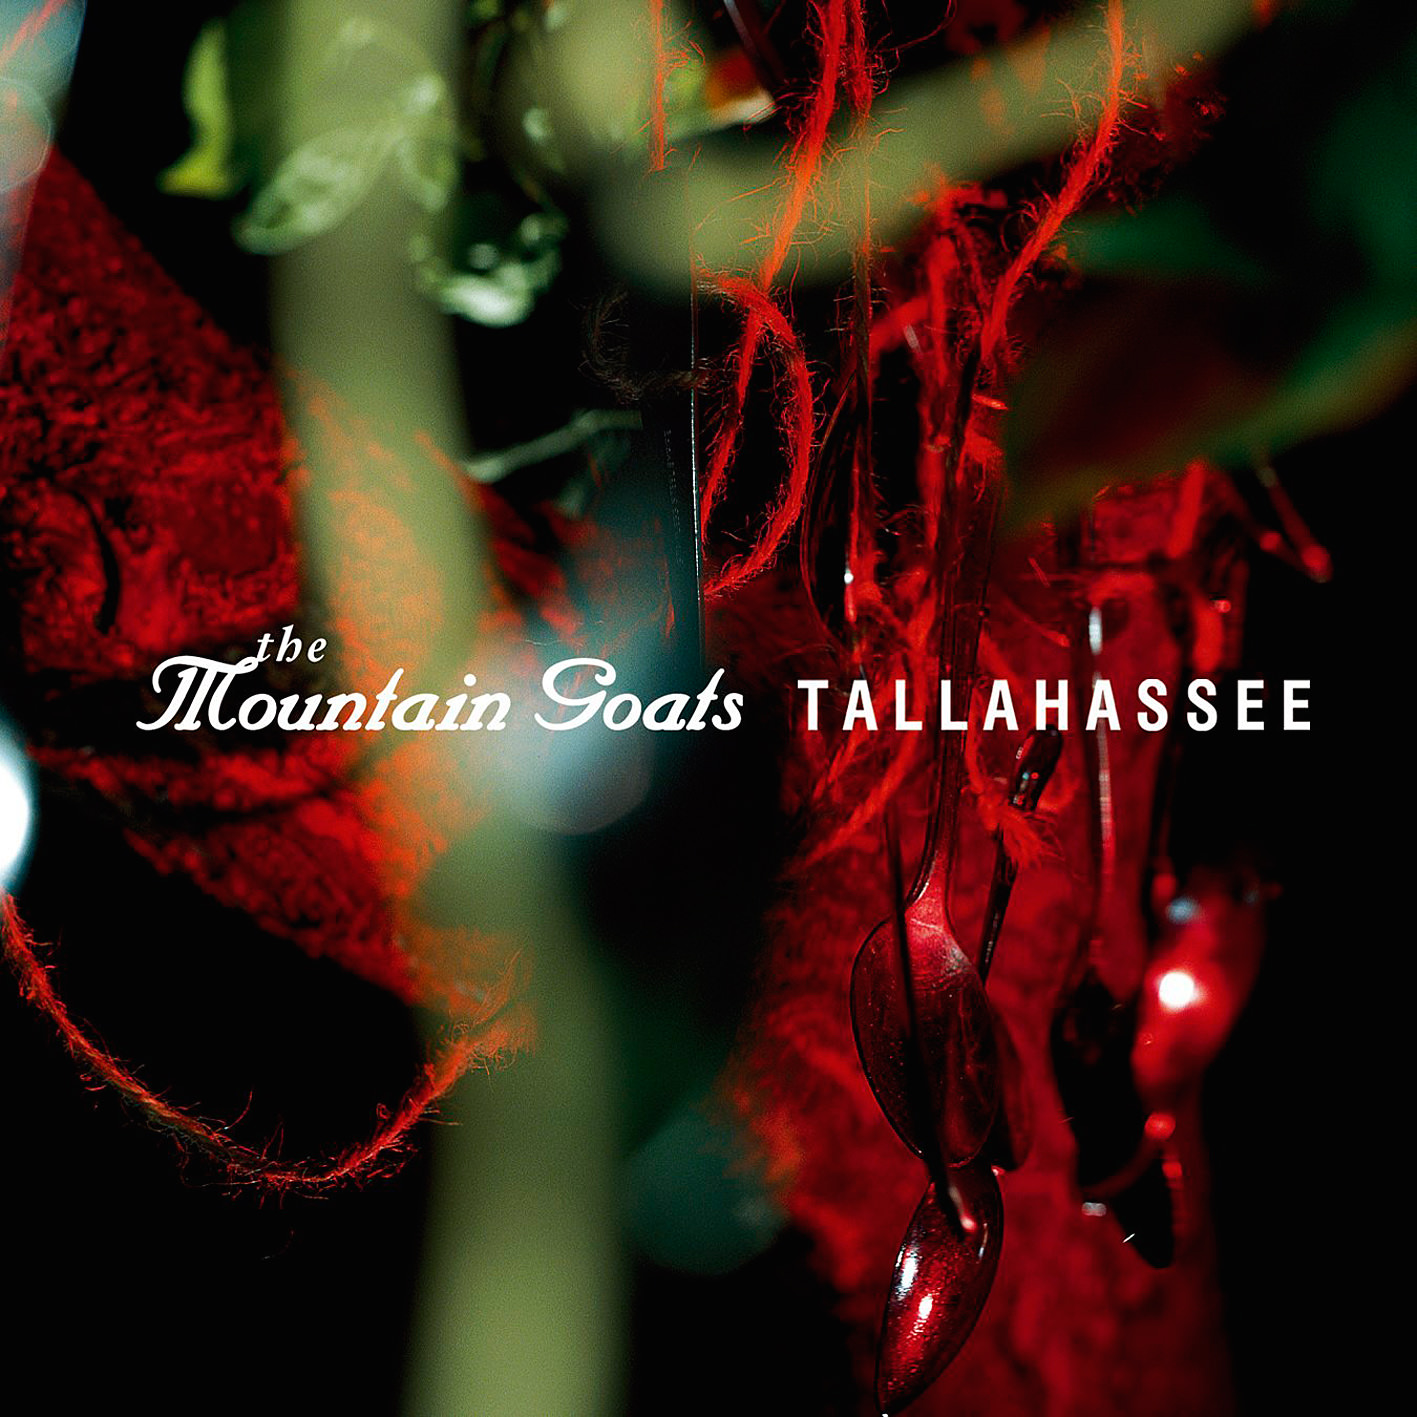 The Mountain Goats - Tallahassee (2002/2014) [HDTracks FLAC 24bit/96kHz]